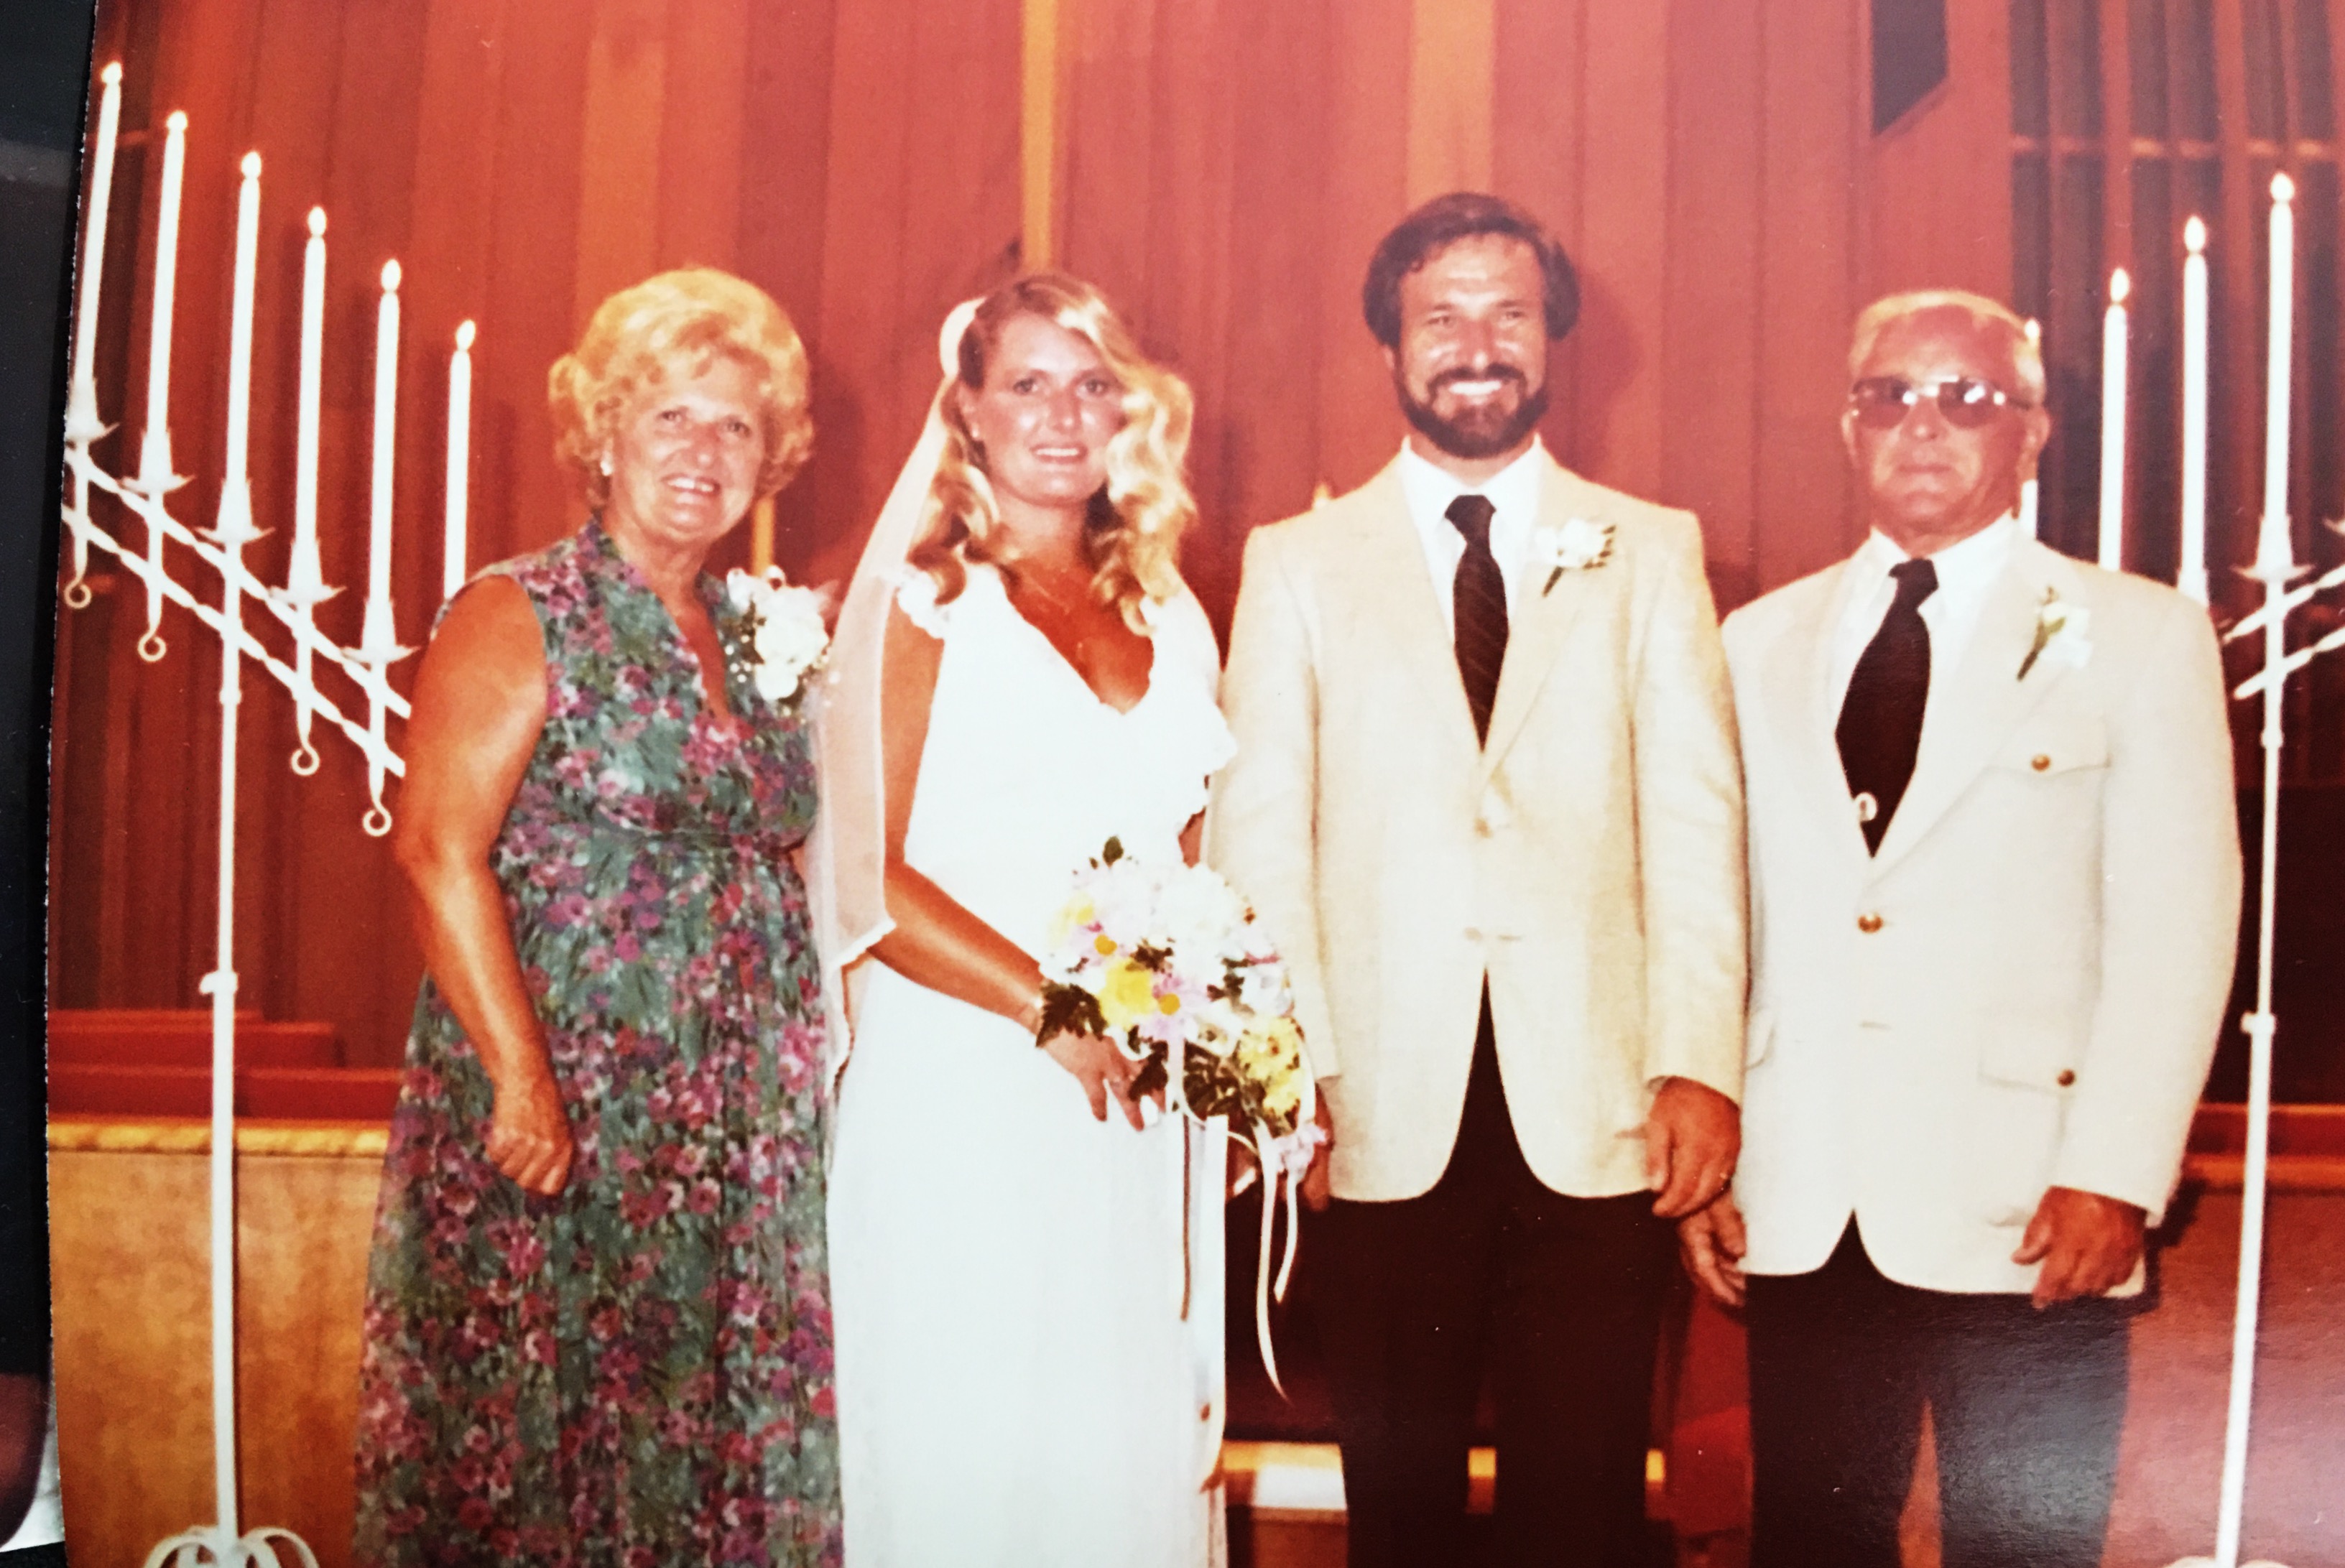  Wedding picture.  June 20,1980